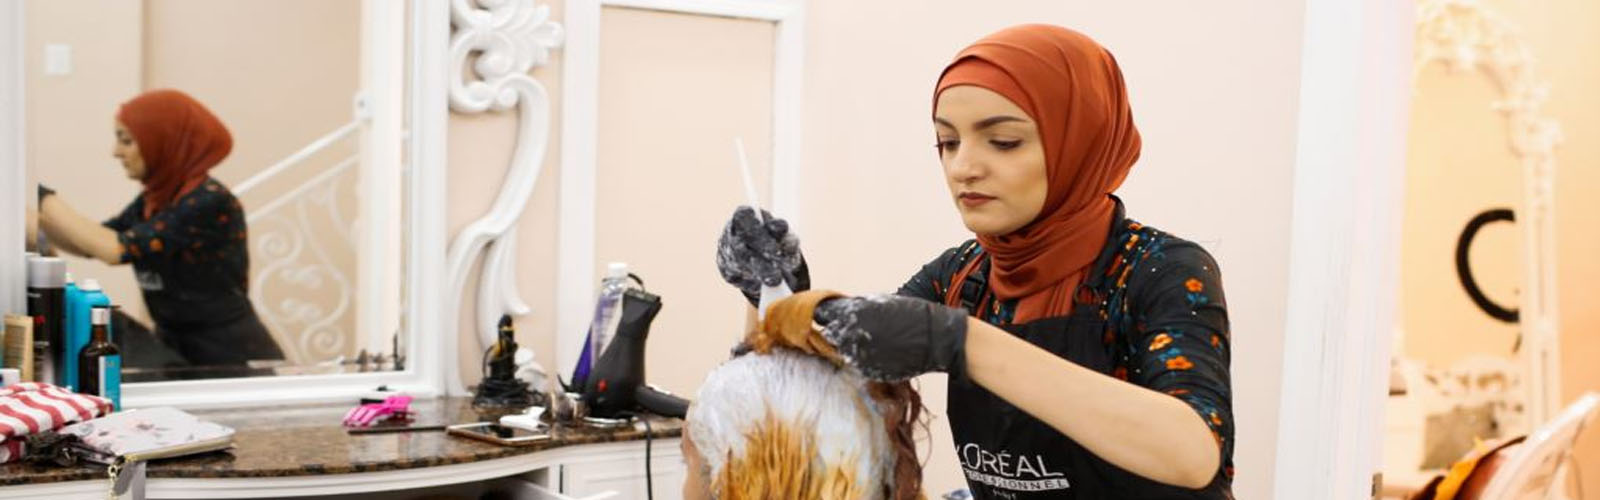 At women-only salon in Brooklyn, Muslim-Americans prepare for Eid